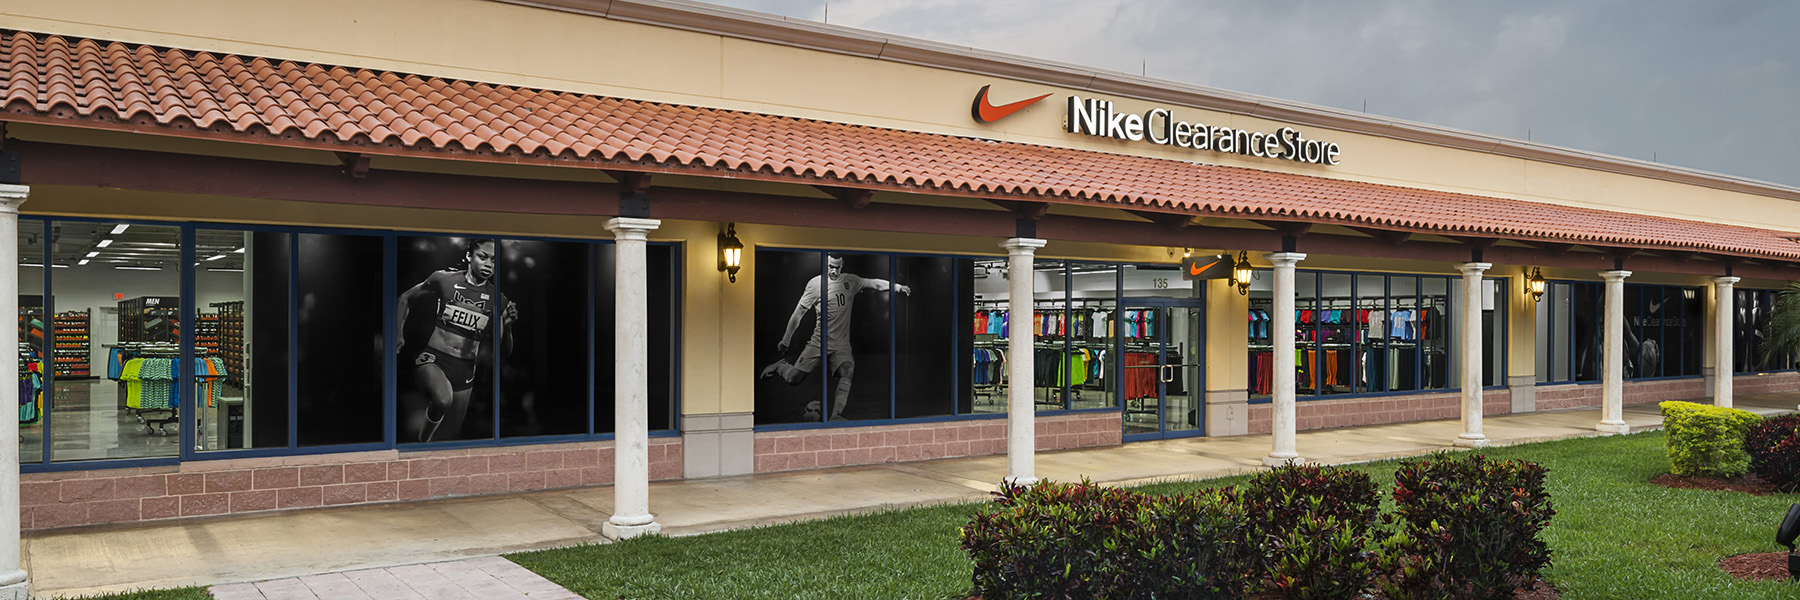 Nike Clearance Store - Florida City. Florida City, FL. Nike.com